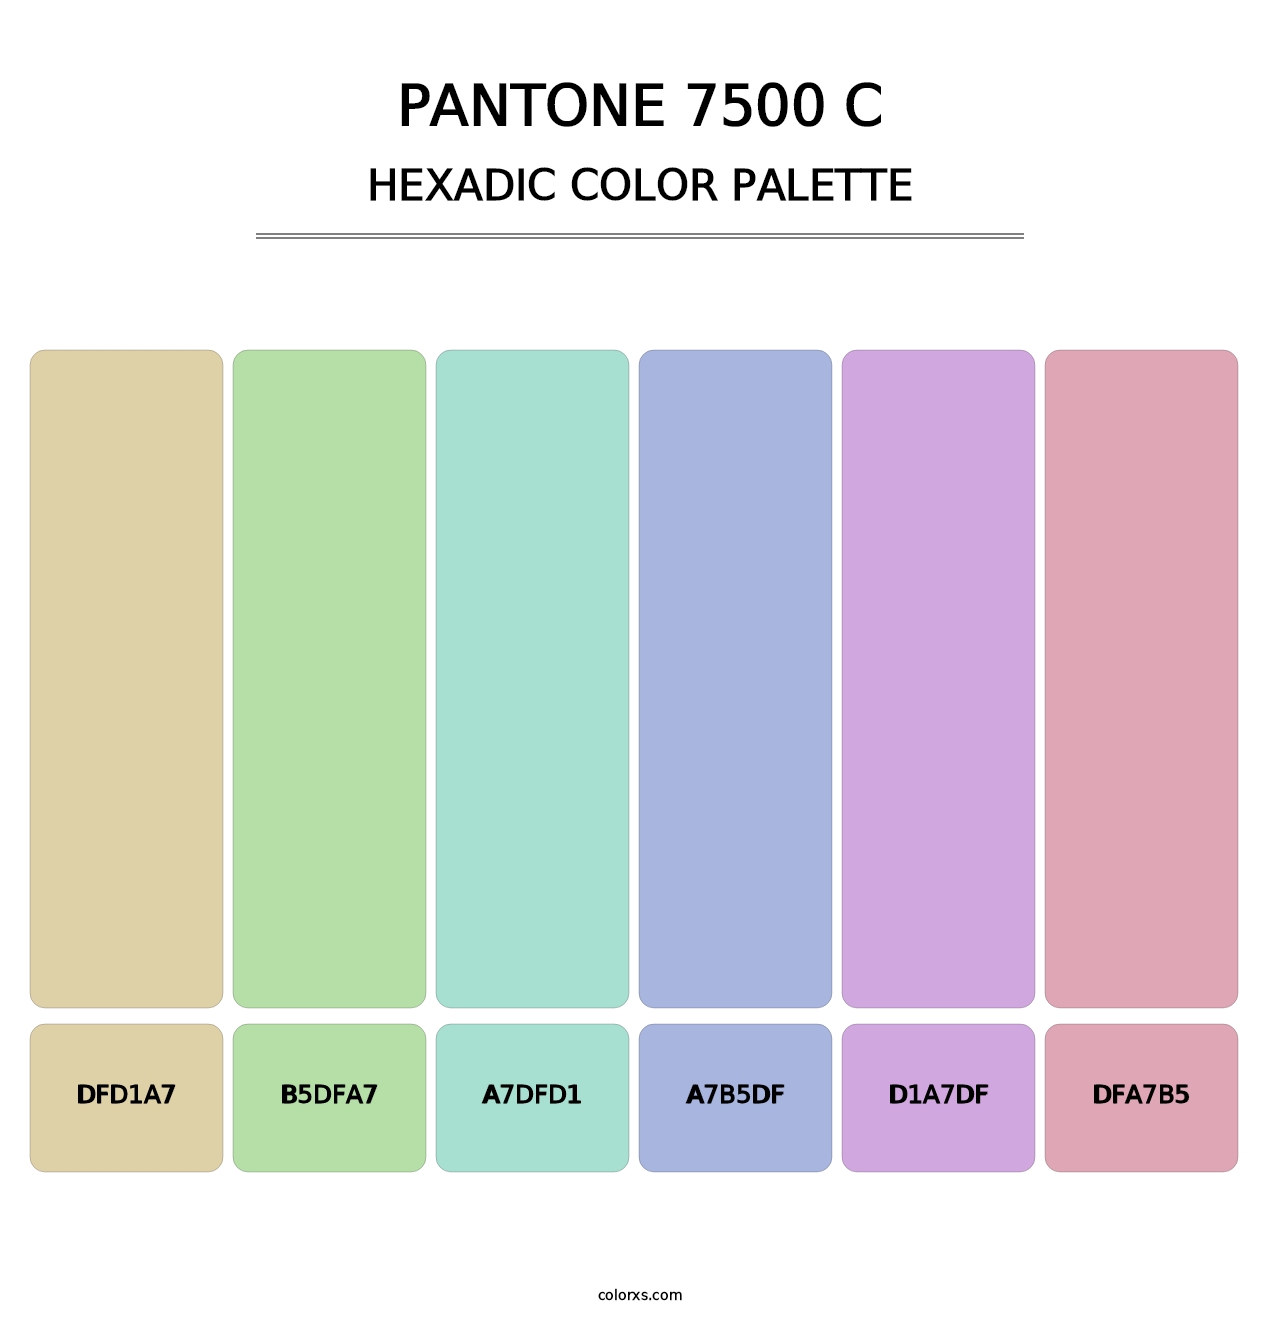 PANTONE 7500 C - Hexadic Color Palette